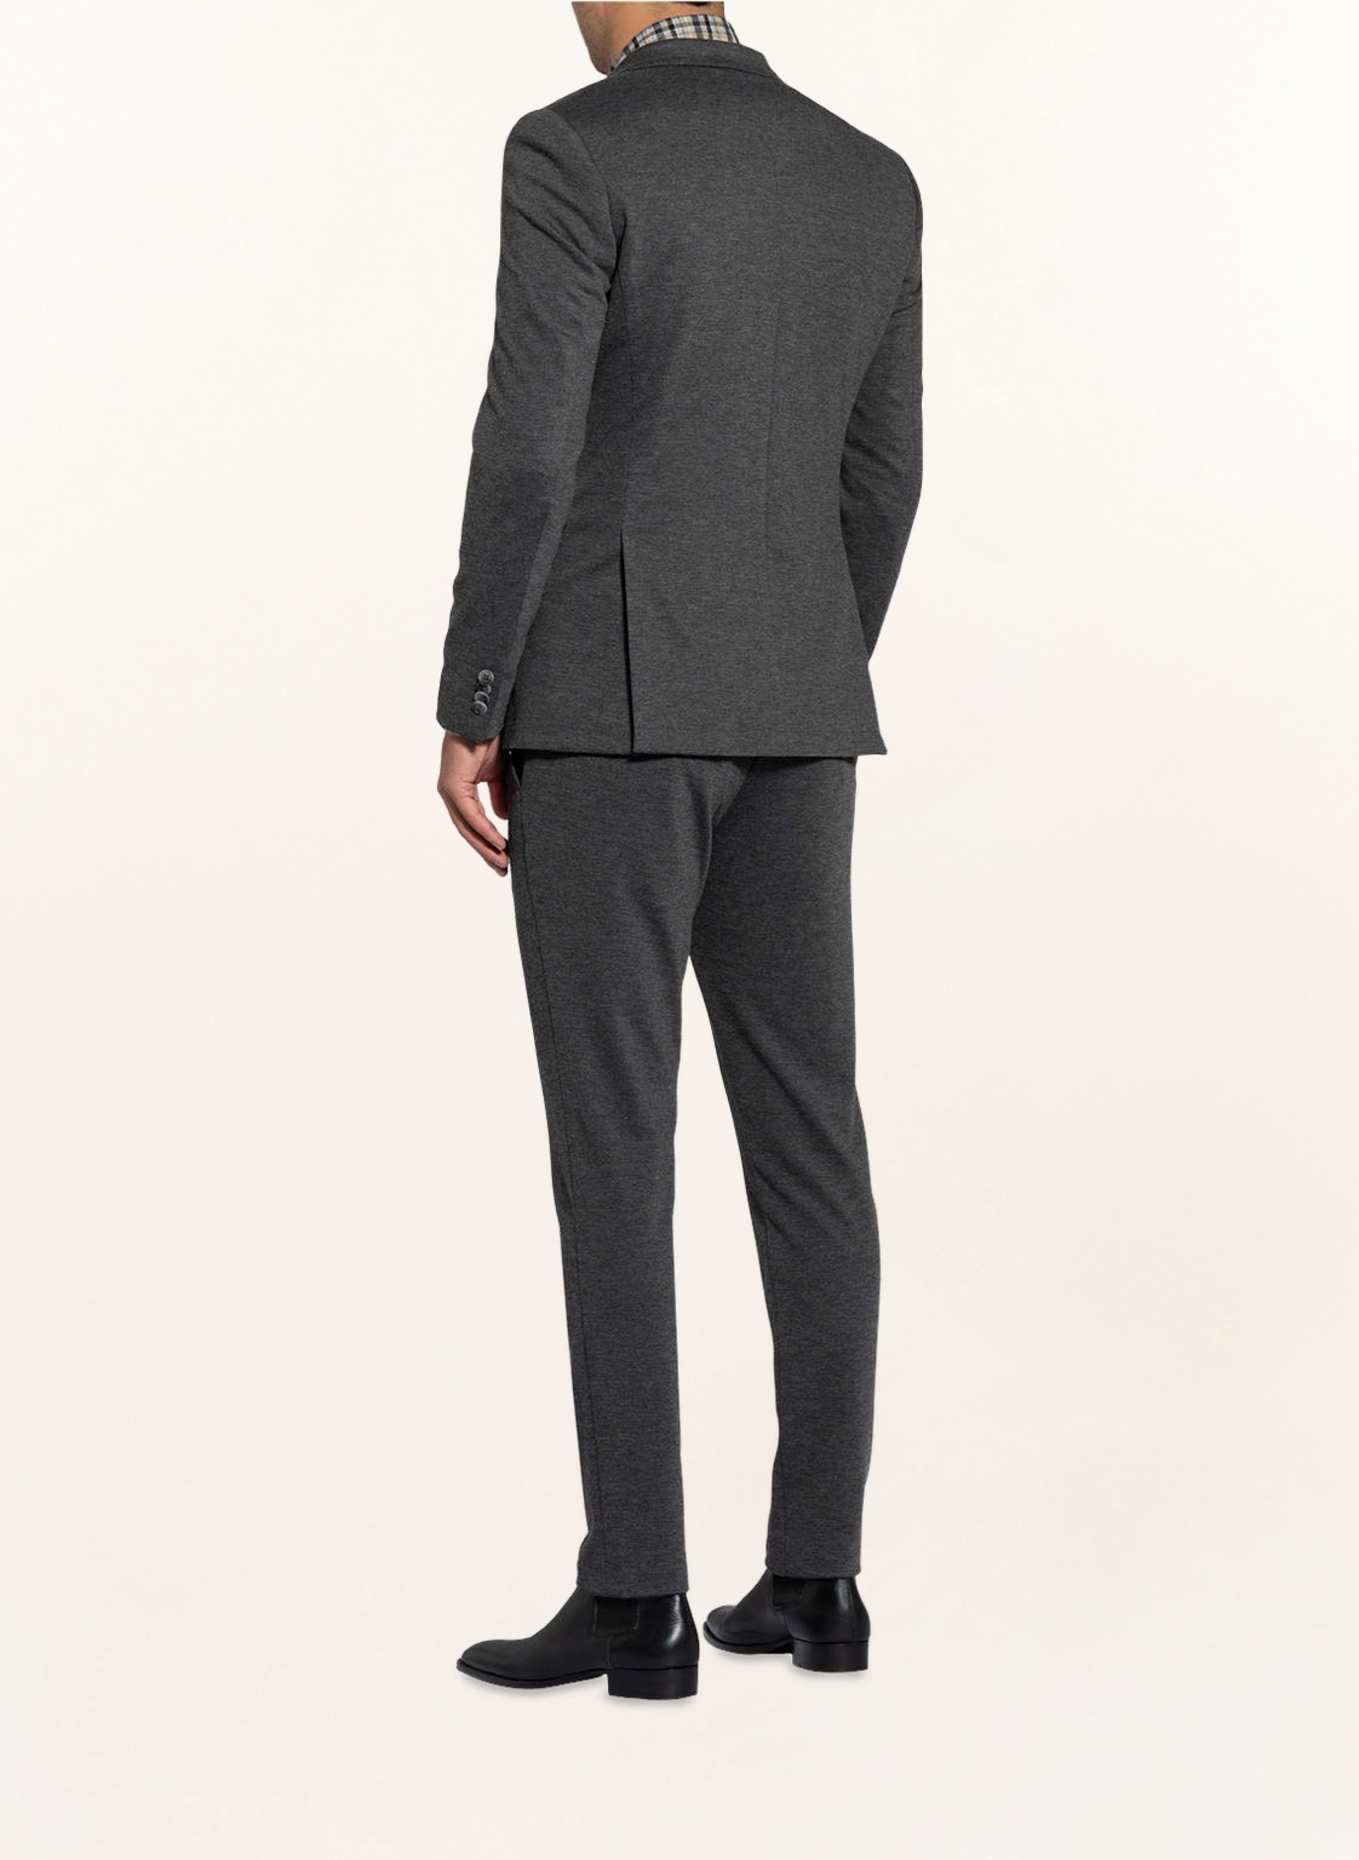 PAUL Suit jacket slim fit in jersey, Color: DARK GRAY MÉLANGE (Image 3)